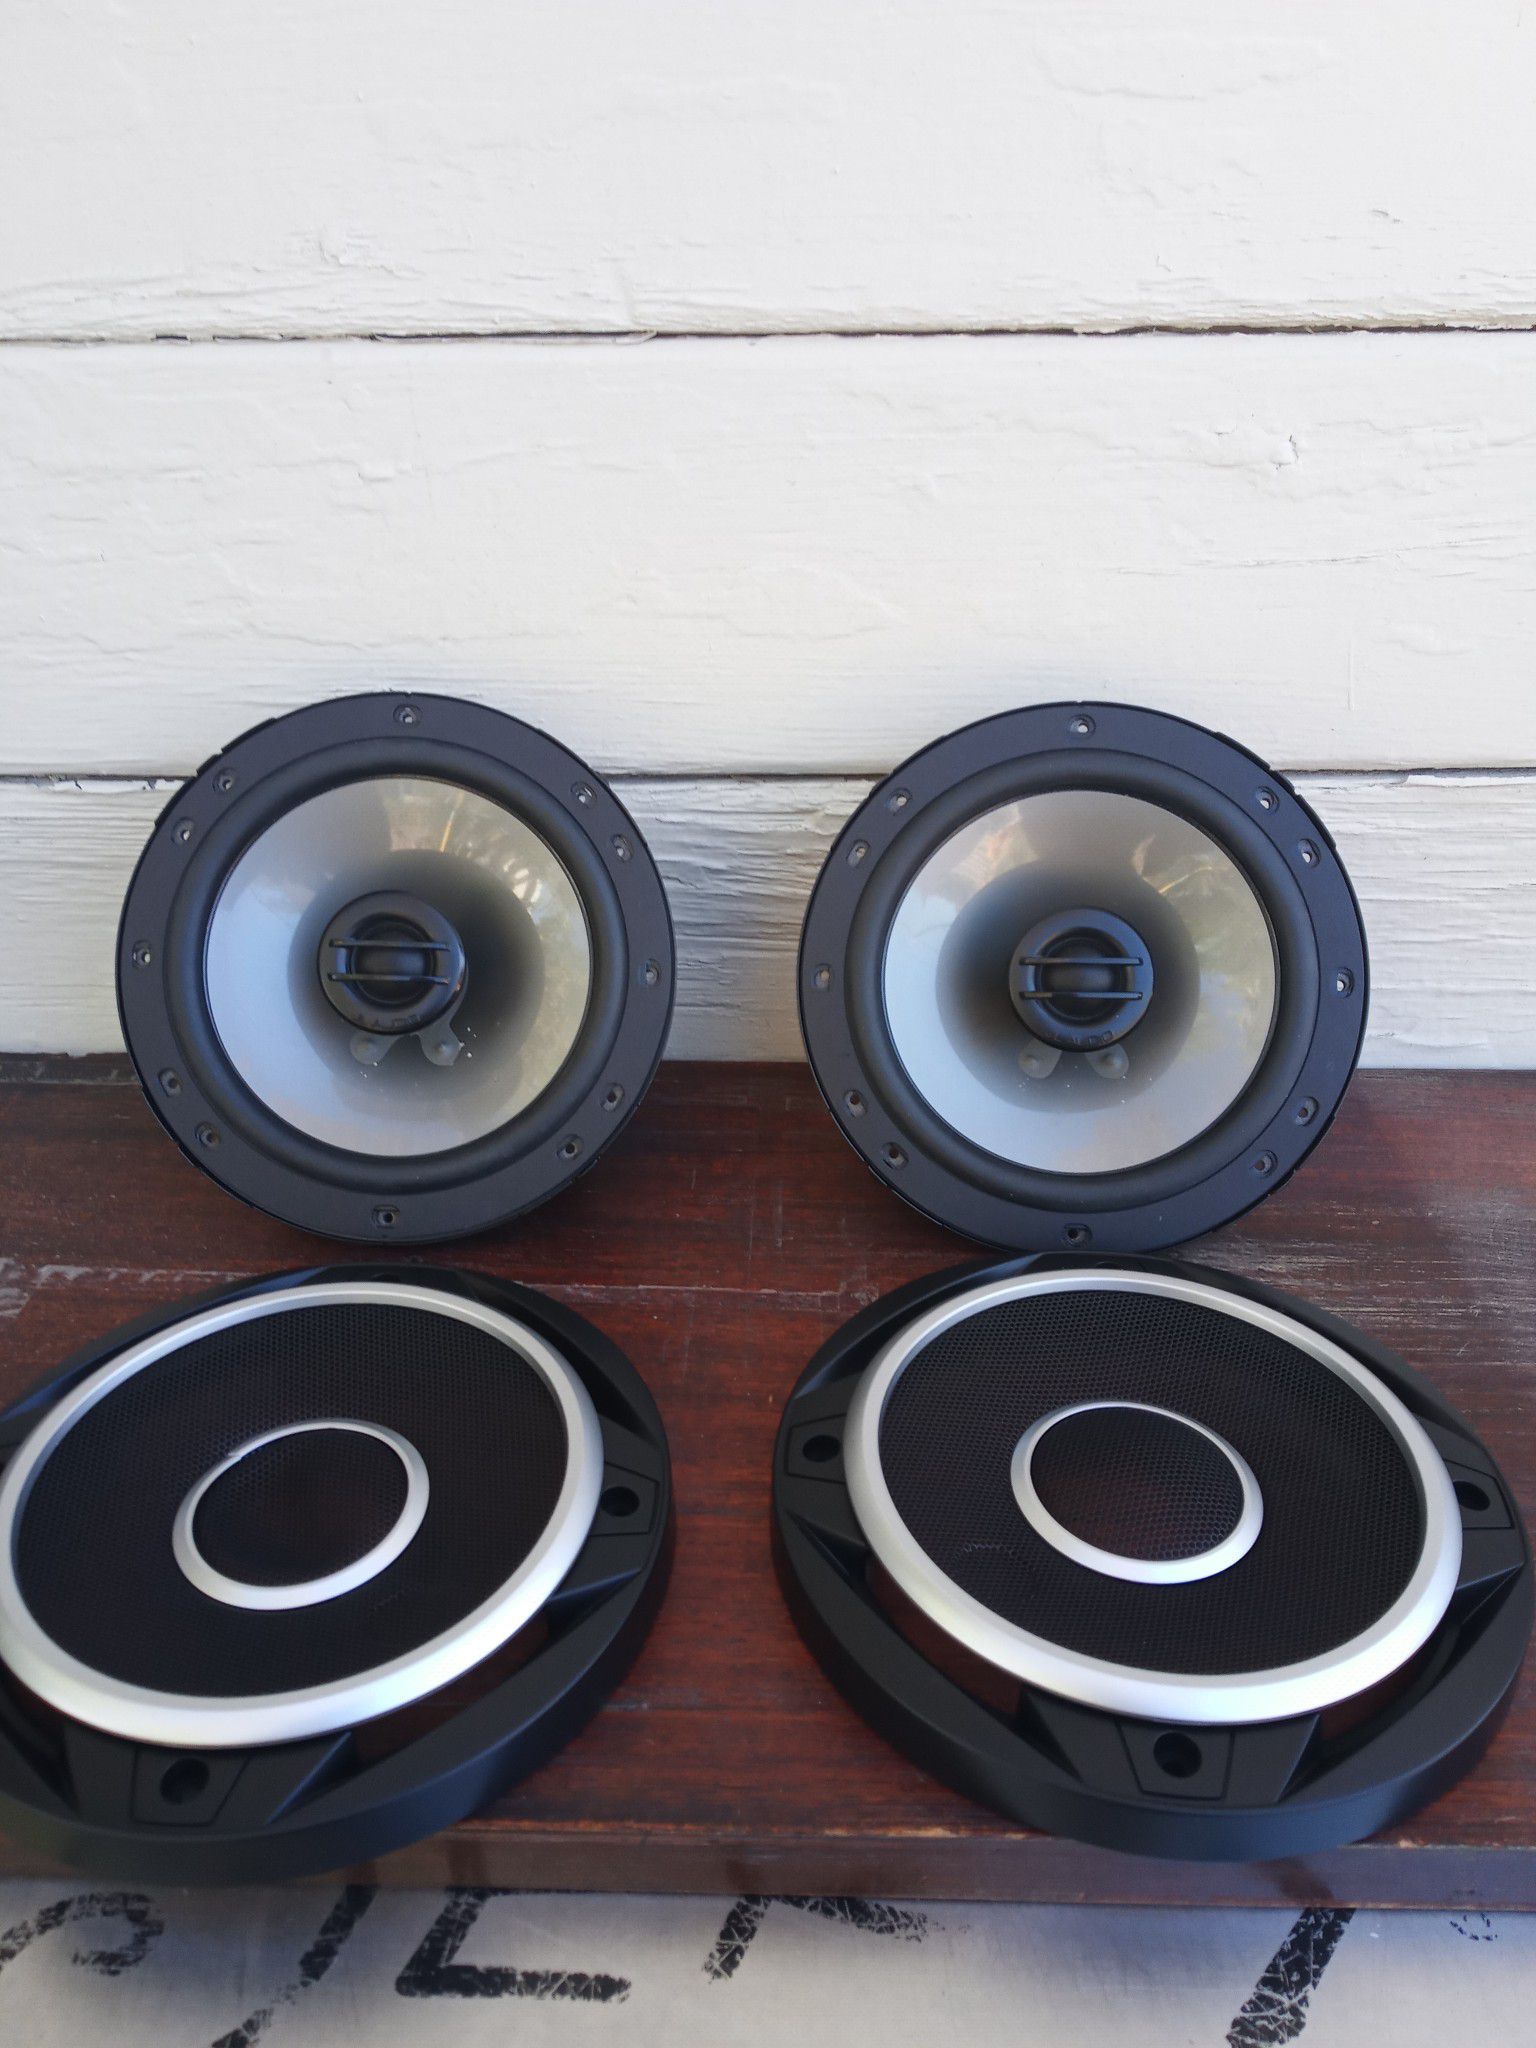 JL Audio C2-600x Series Speakers! MUST SELL!! Brand New Still In Box!!